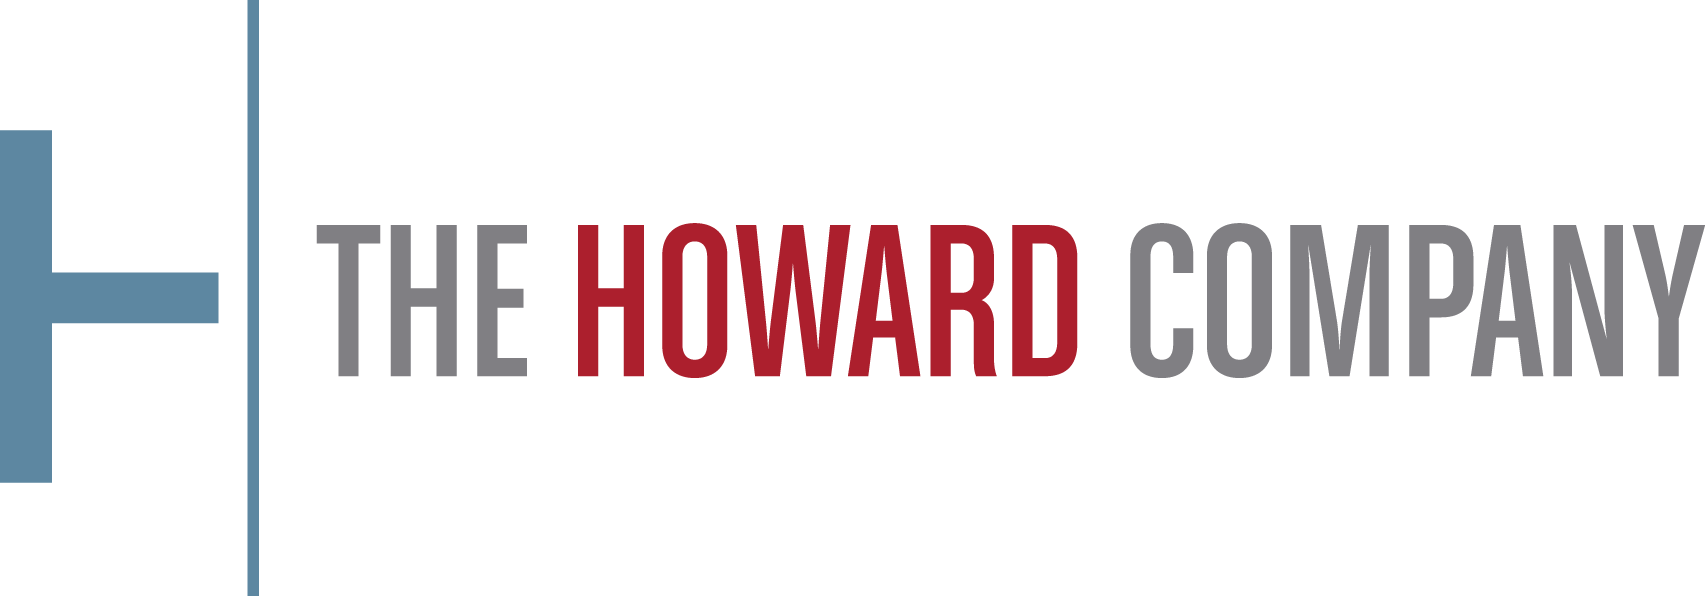 The Howard Companu